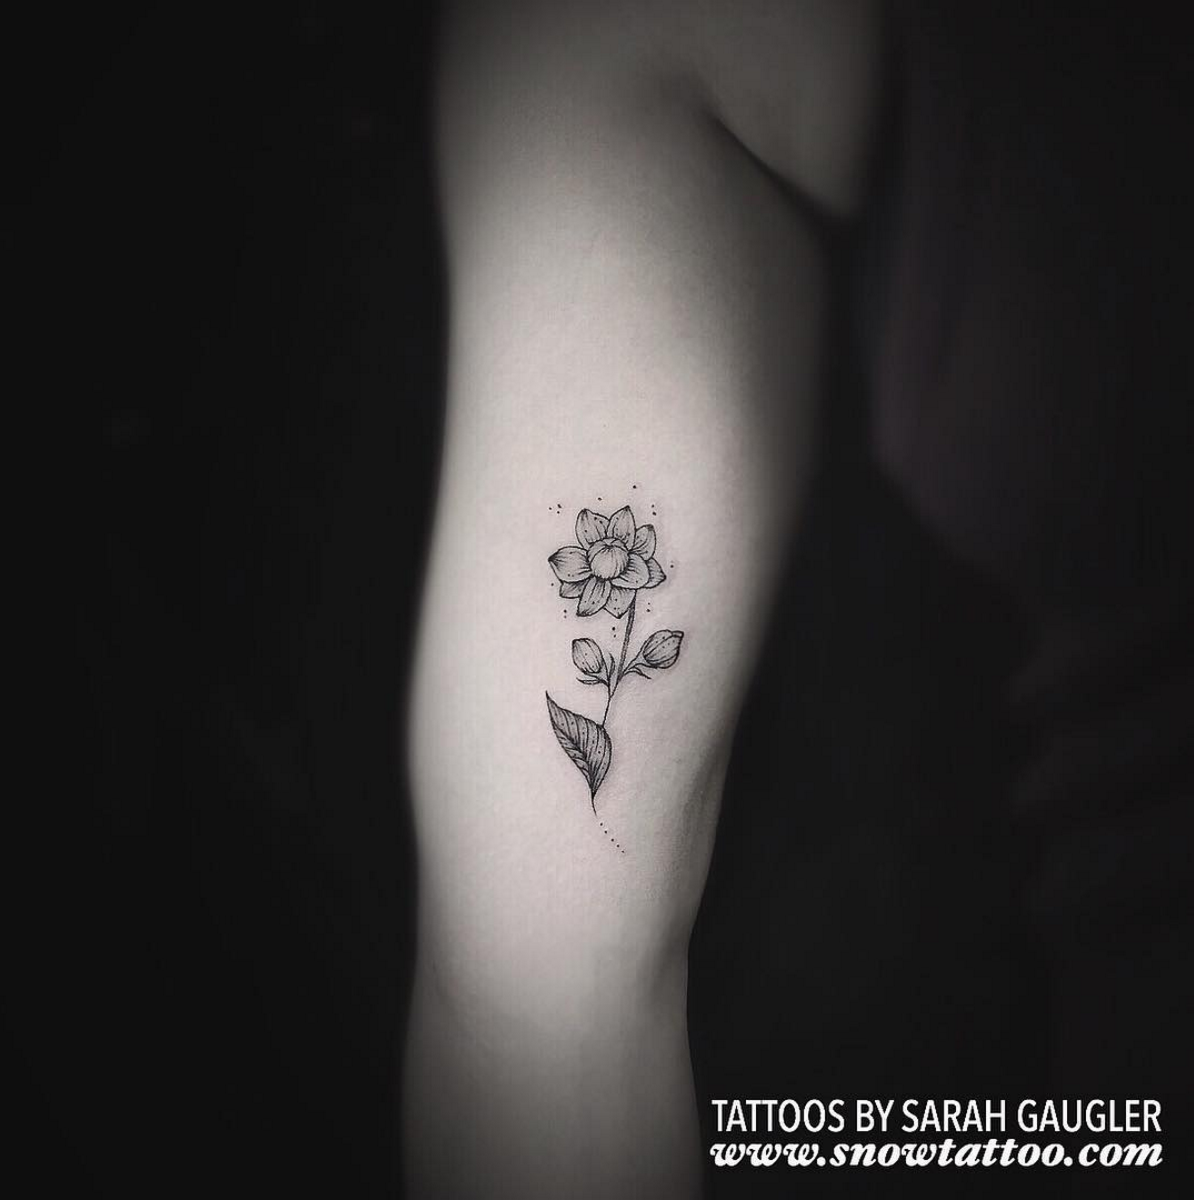 Sarah Gaugler Snow Tattoo Custom Floral Sampaguita New York Best Tattoos Best Tattoo Artist NYC.png